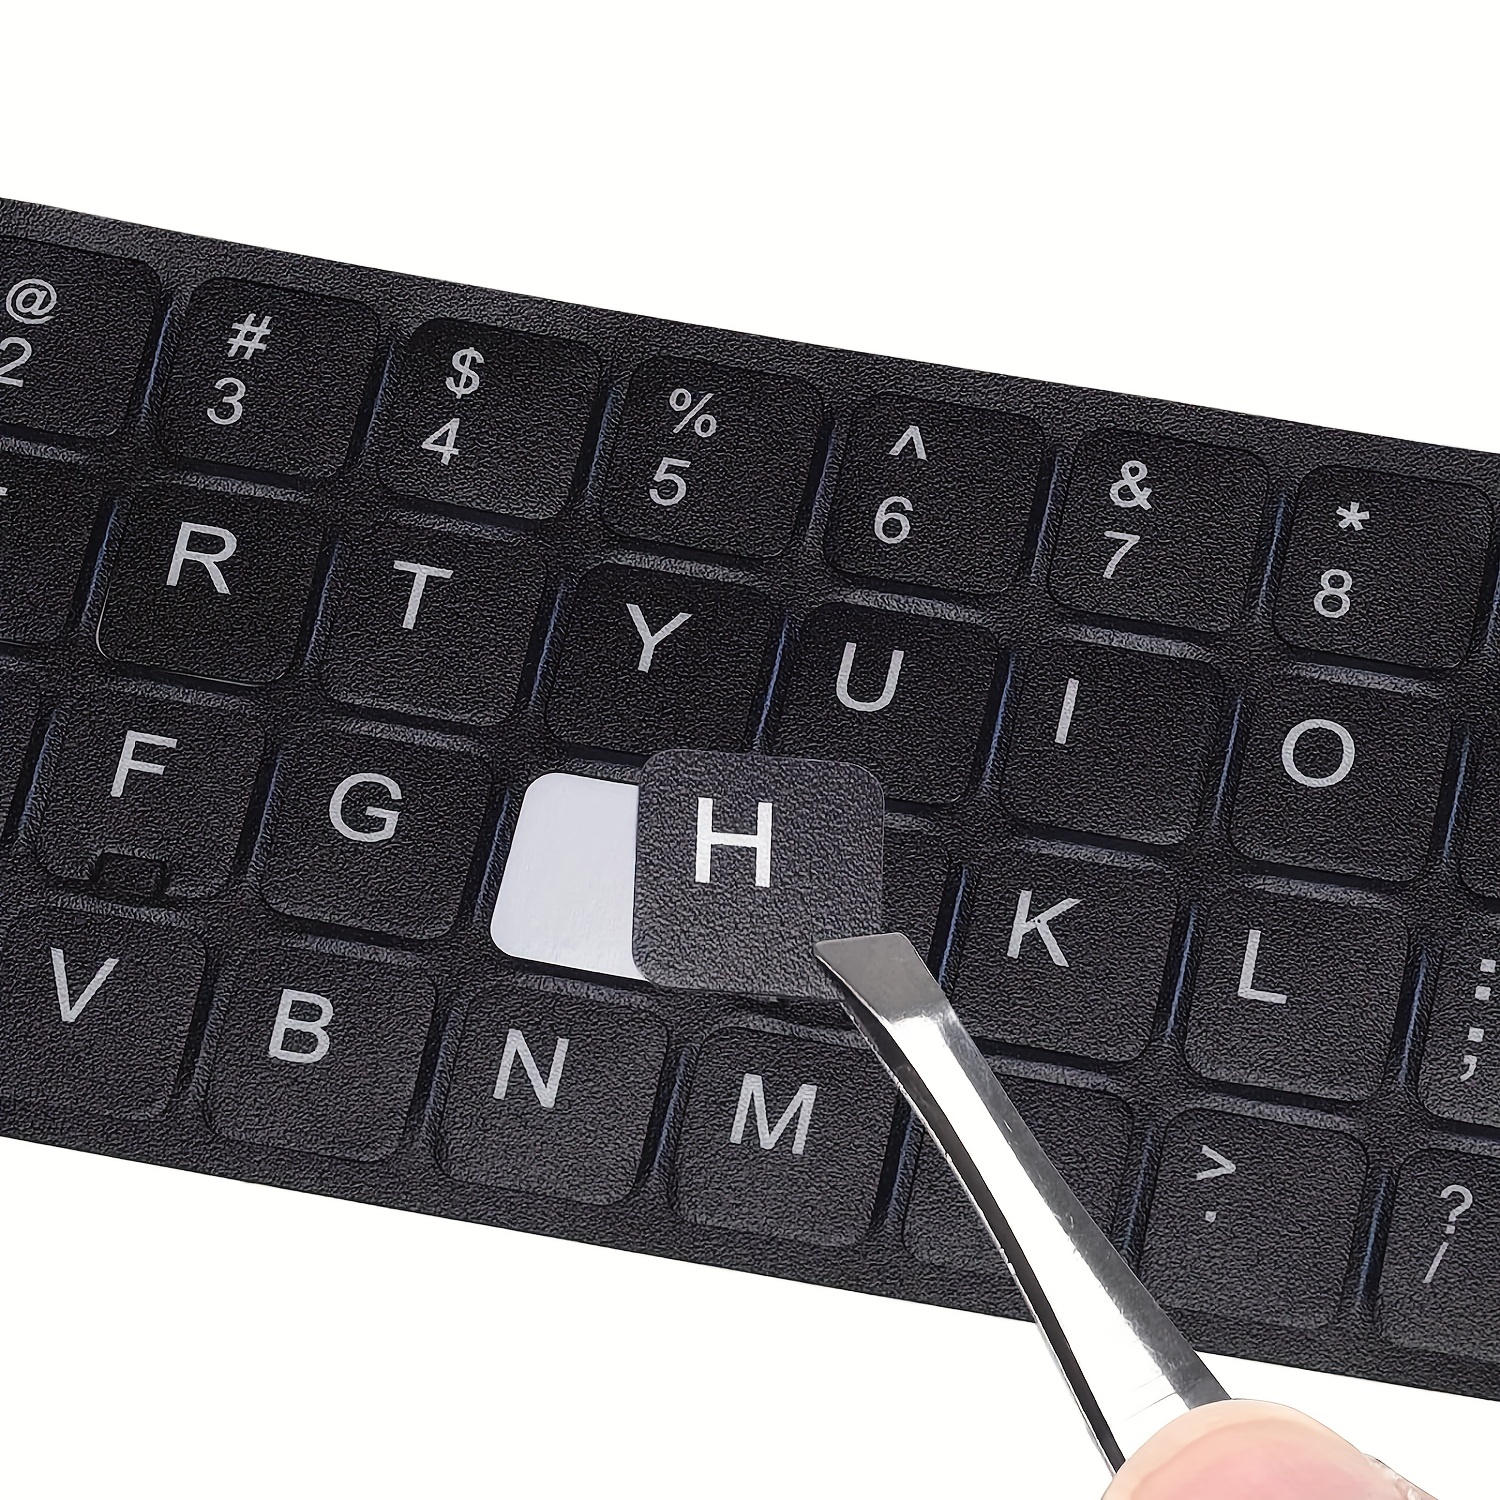 Autocollants clavier rétro MacBook Air Skin MacBook Keyboard Decal